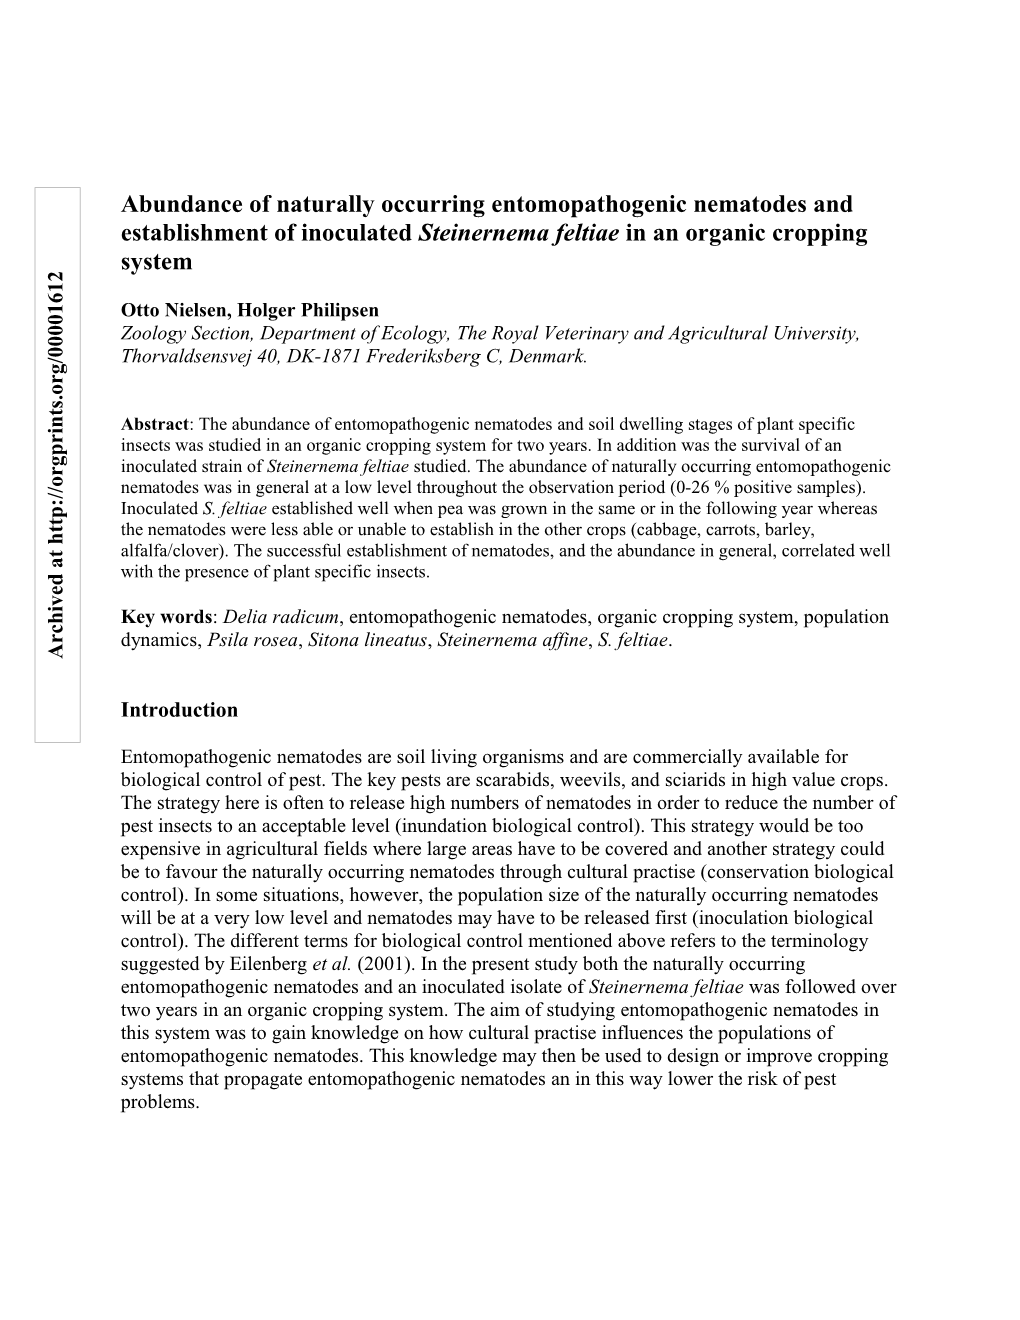 Abundance of Naturally Occurring Entomopathogenic Nematodes and Establishment of Inoculated